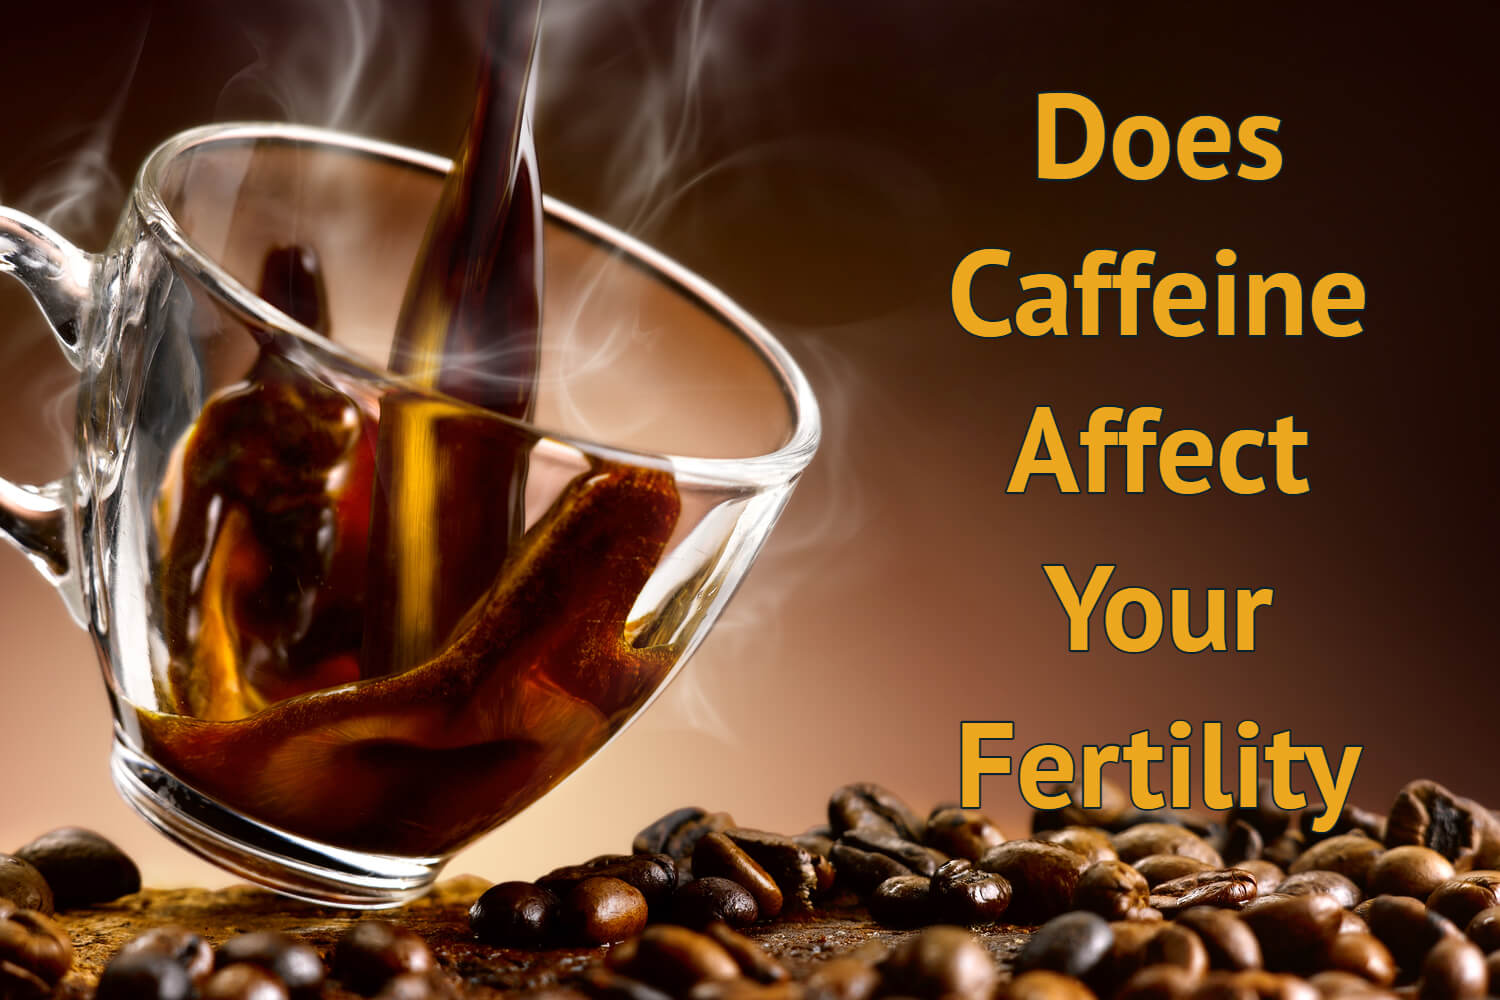 Does Caffeine Affect Your Fertility?